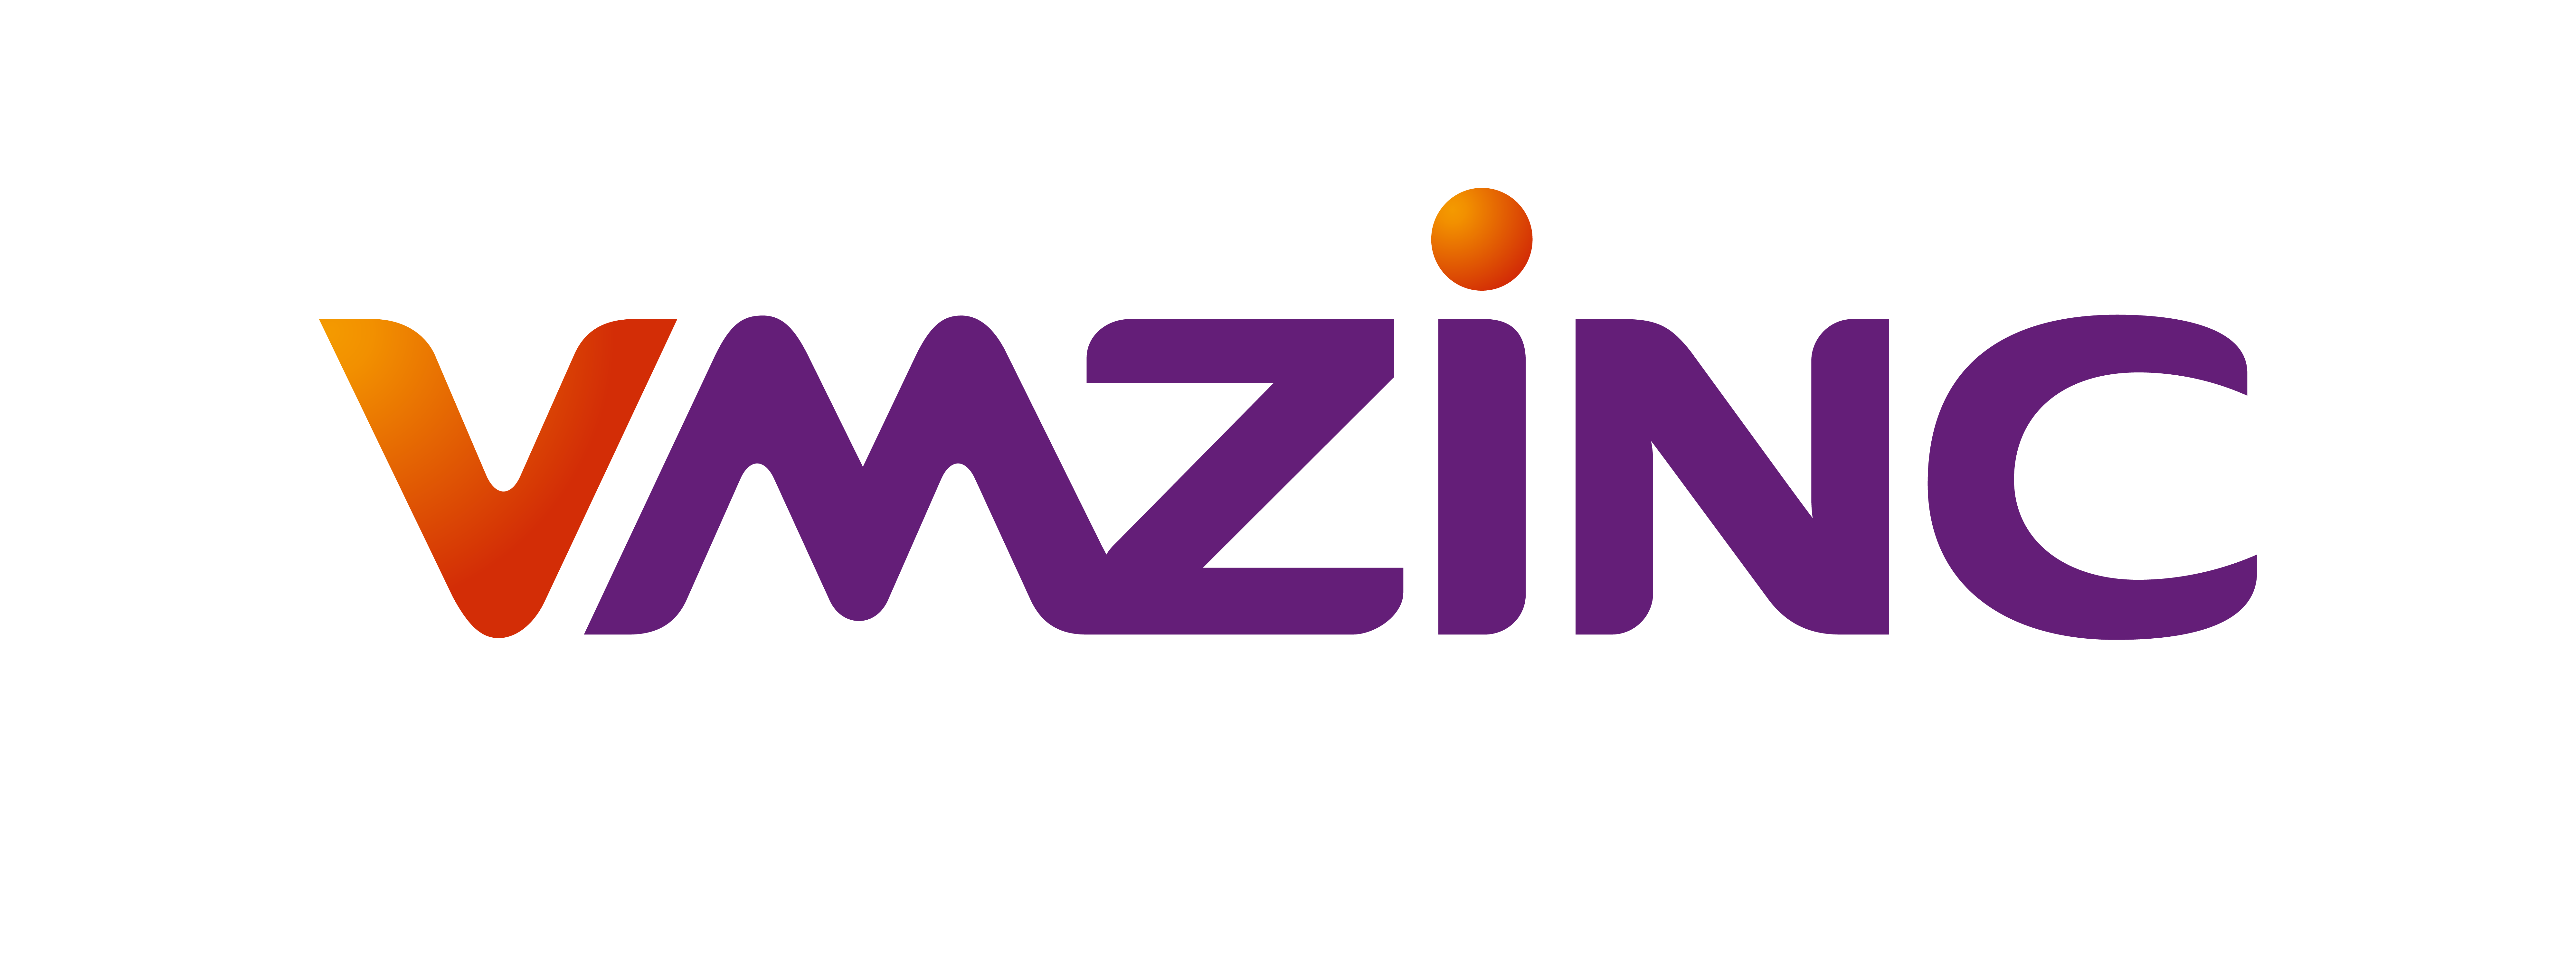 Logo VMZINC